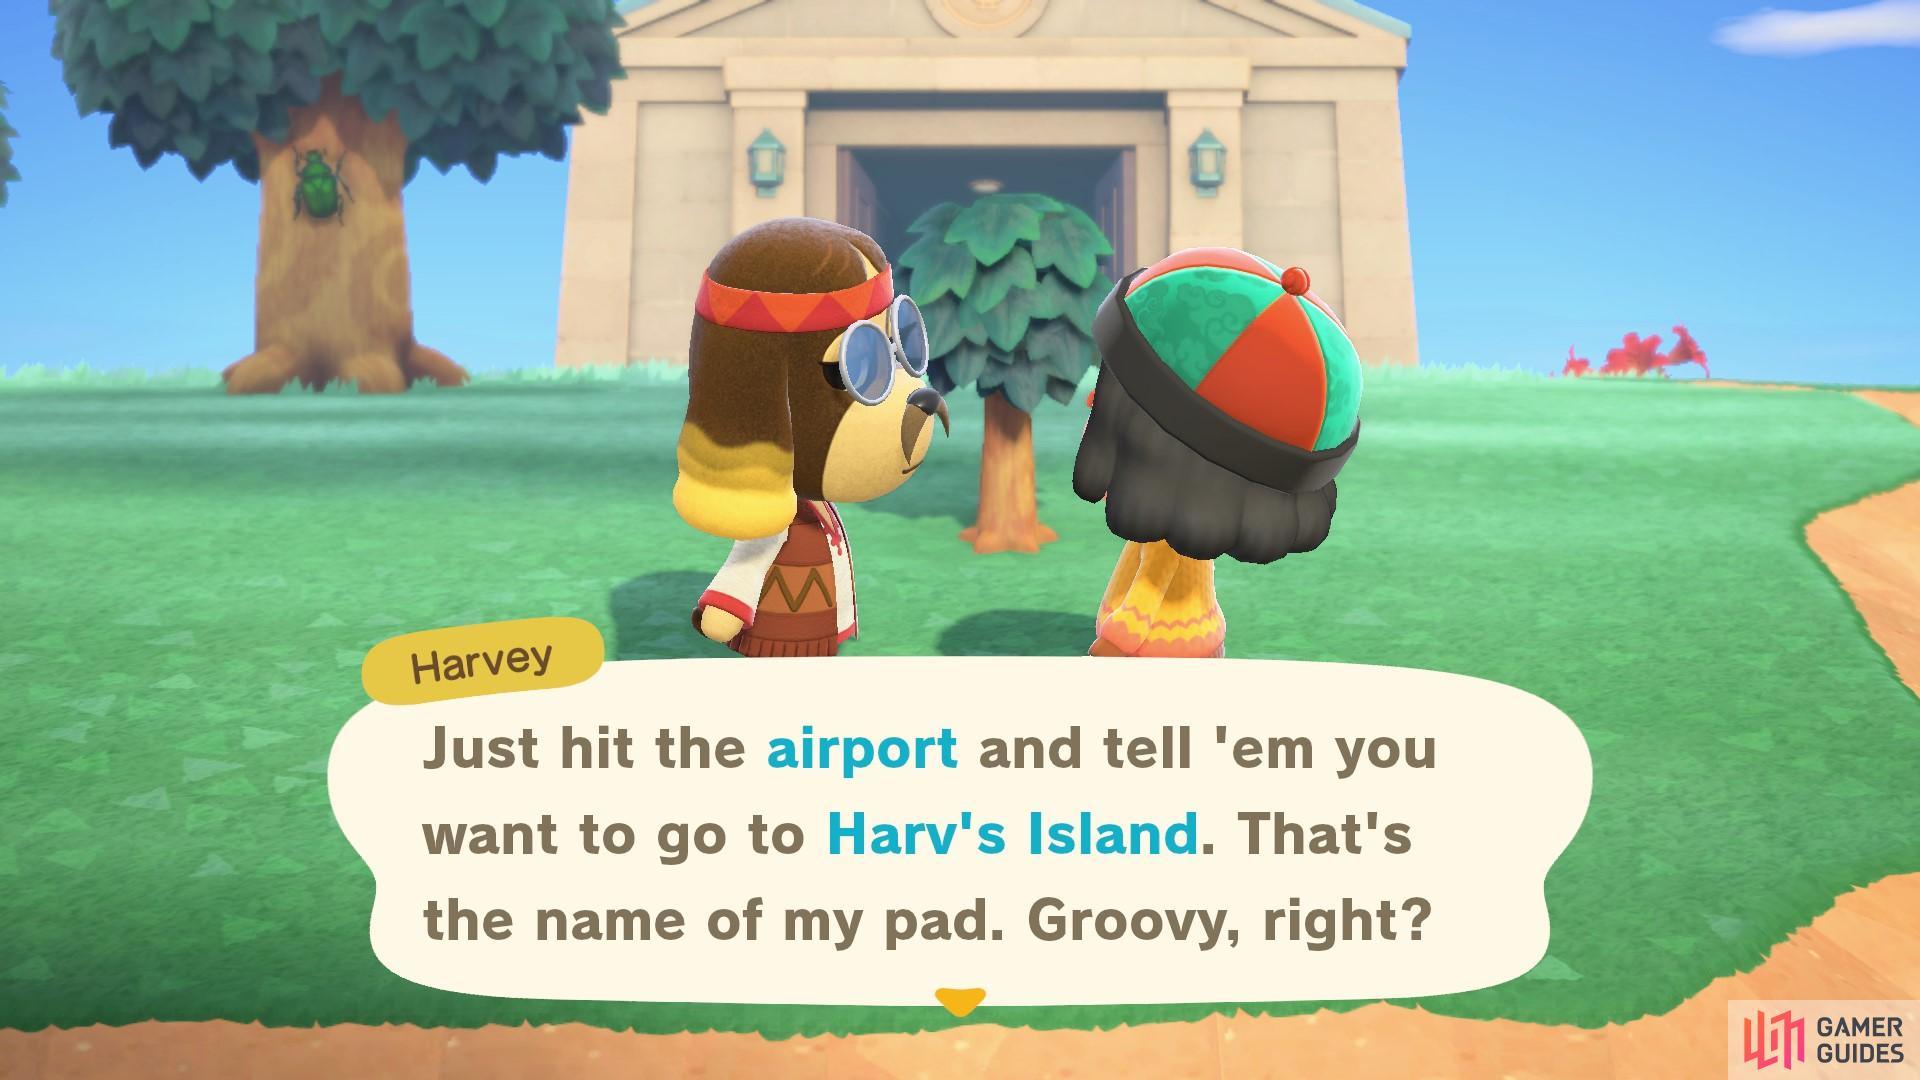 Harvey invites you to his island to see his photo studio.